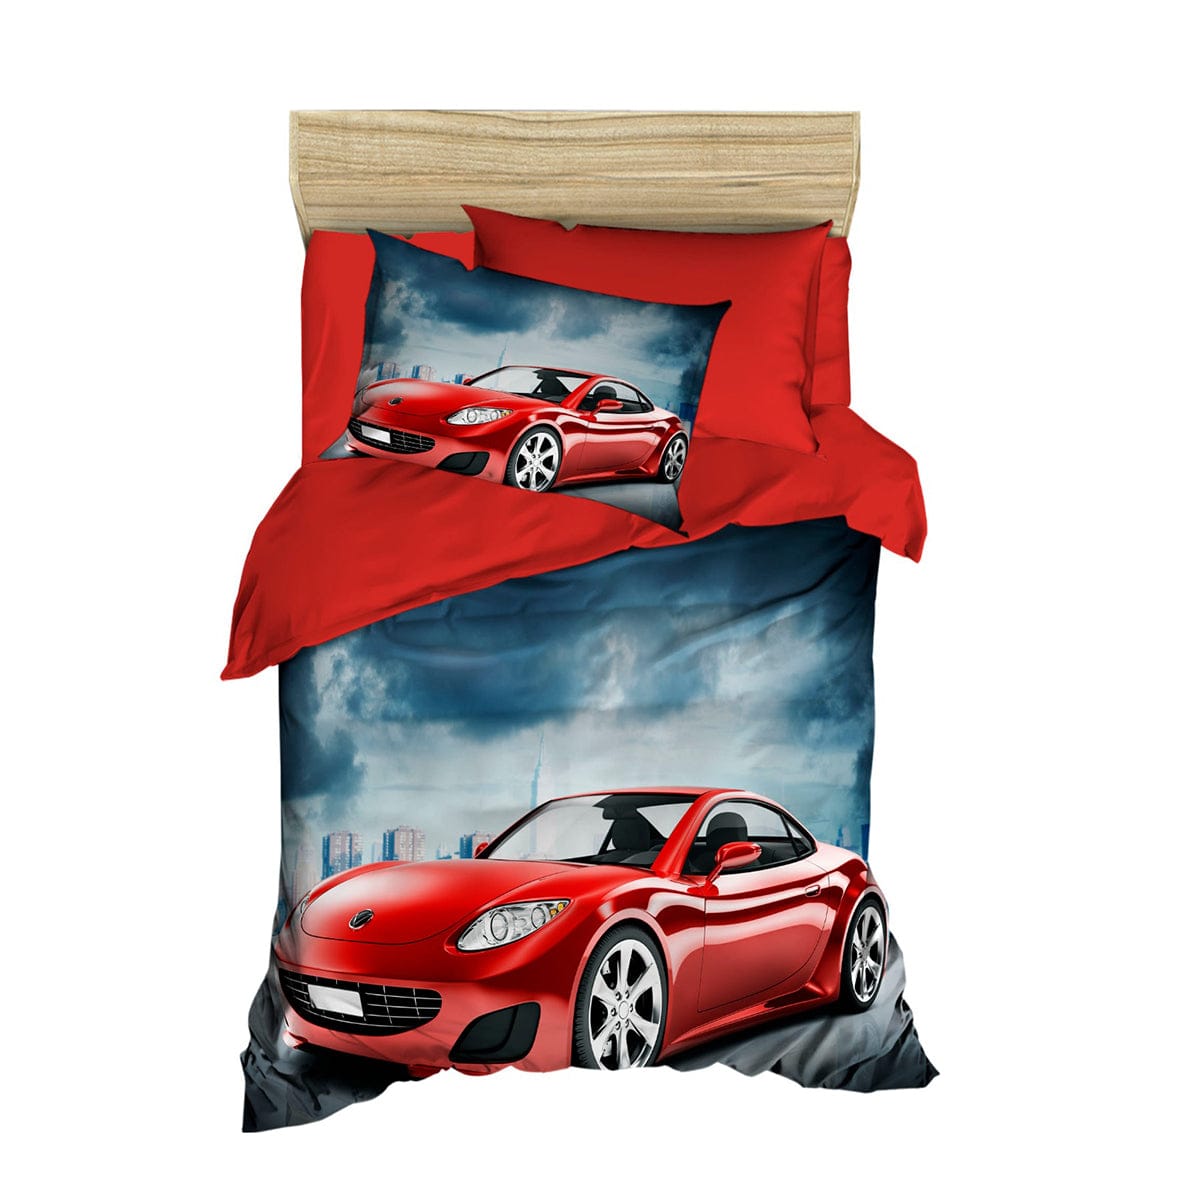 RED RACER Bed Duvet Cover Set